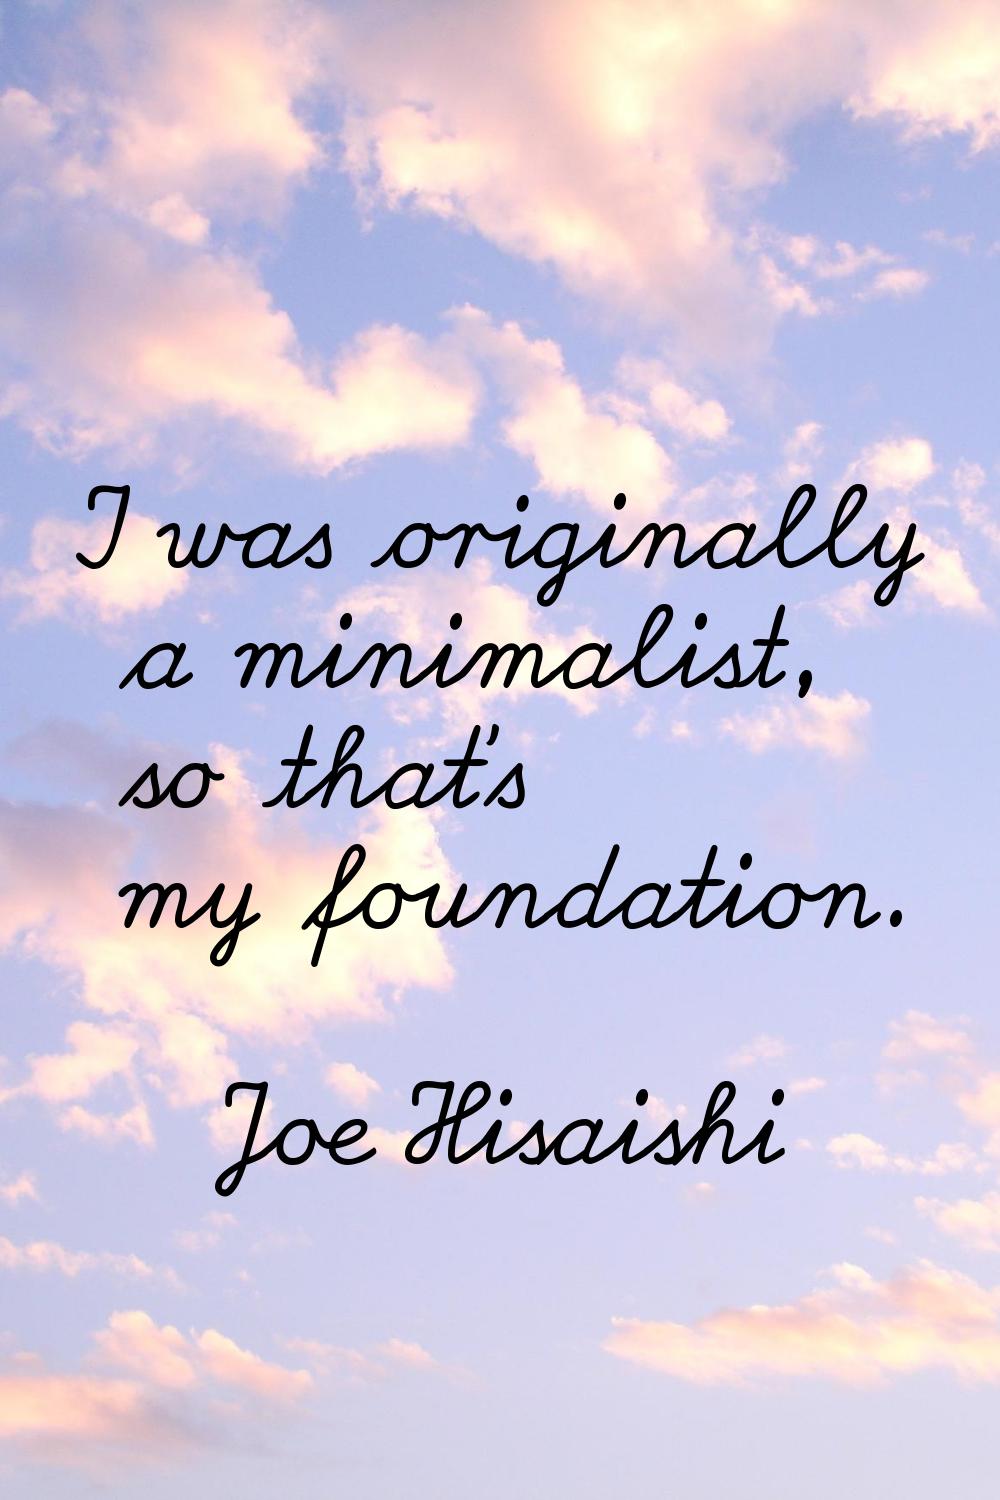 I was originally a minimalist, so that's my foundation.